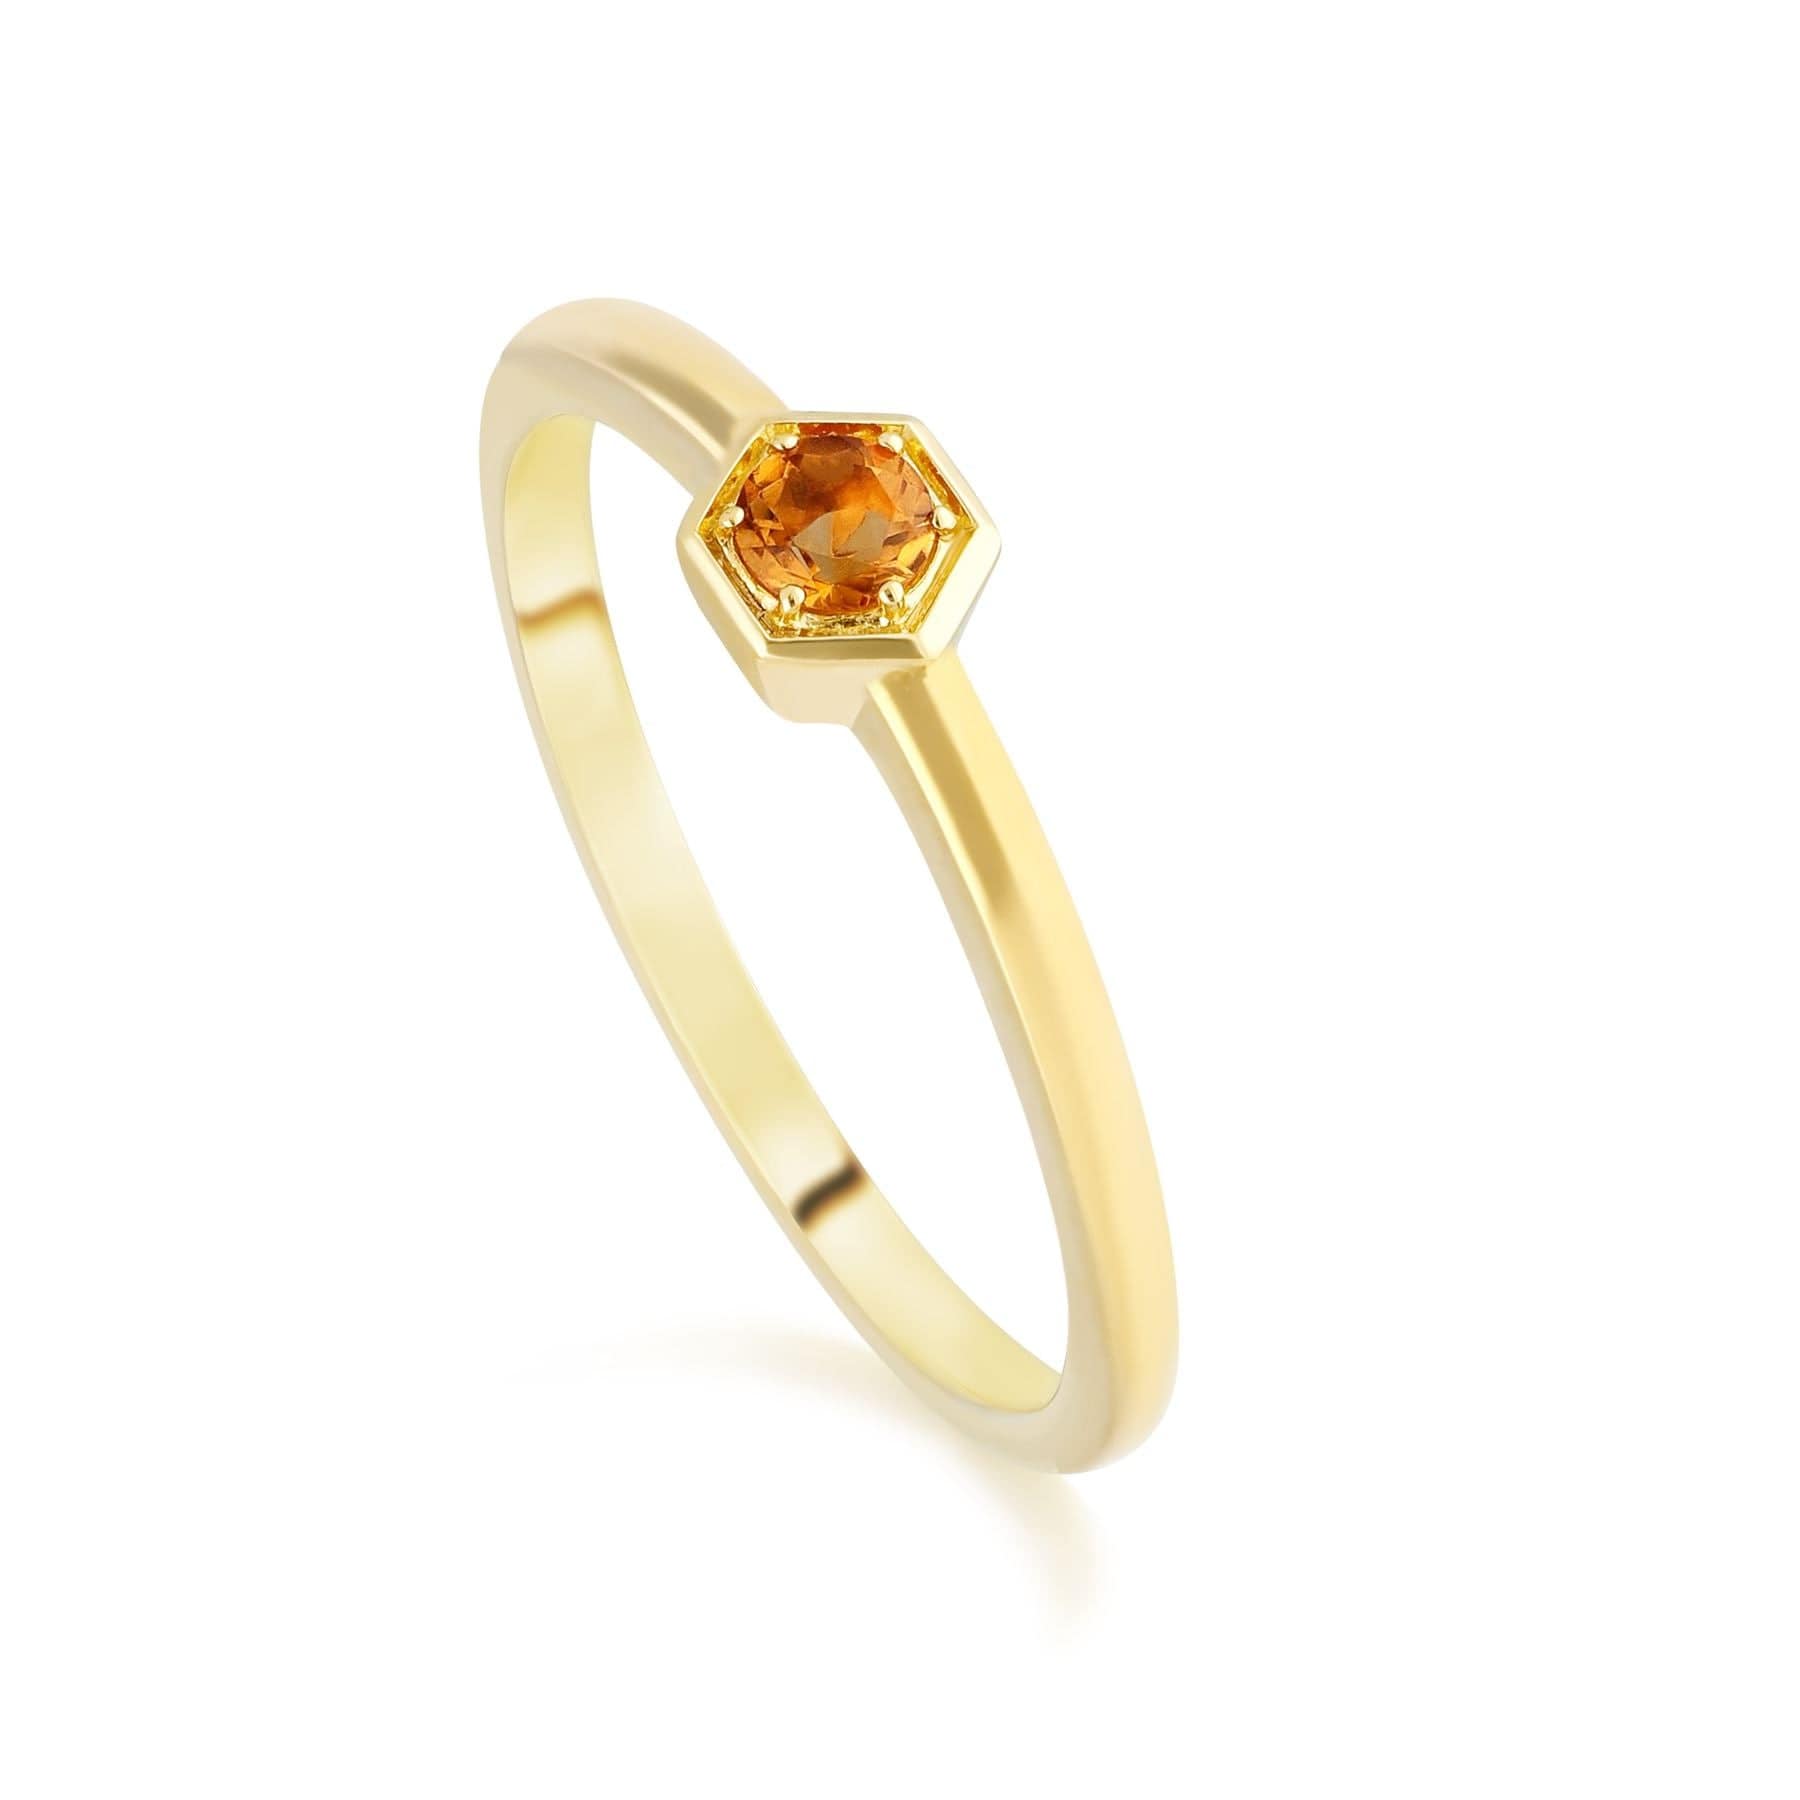 Honeycomb Inspired Citrine Solitaire Ring in 9ct Yellow Gold - Gemondo